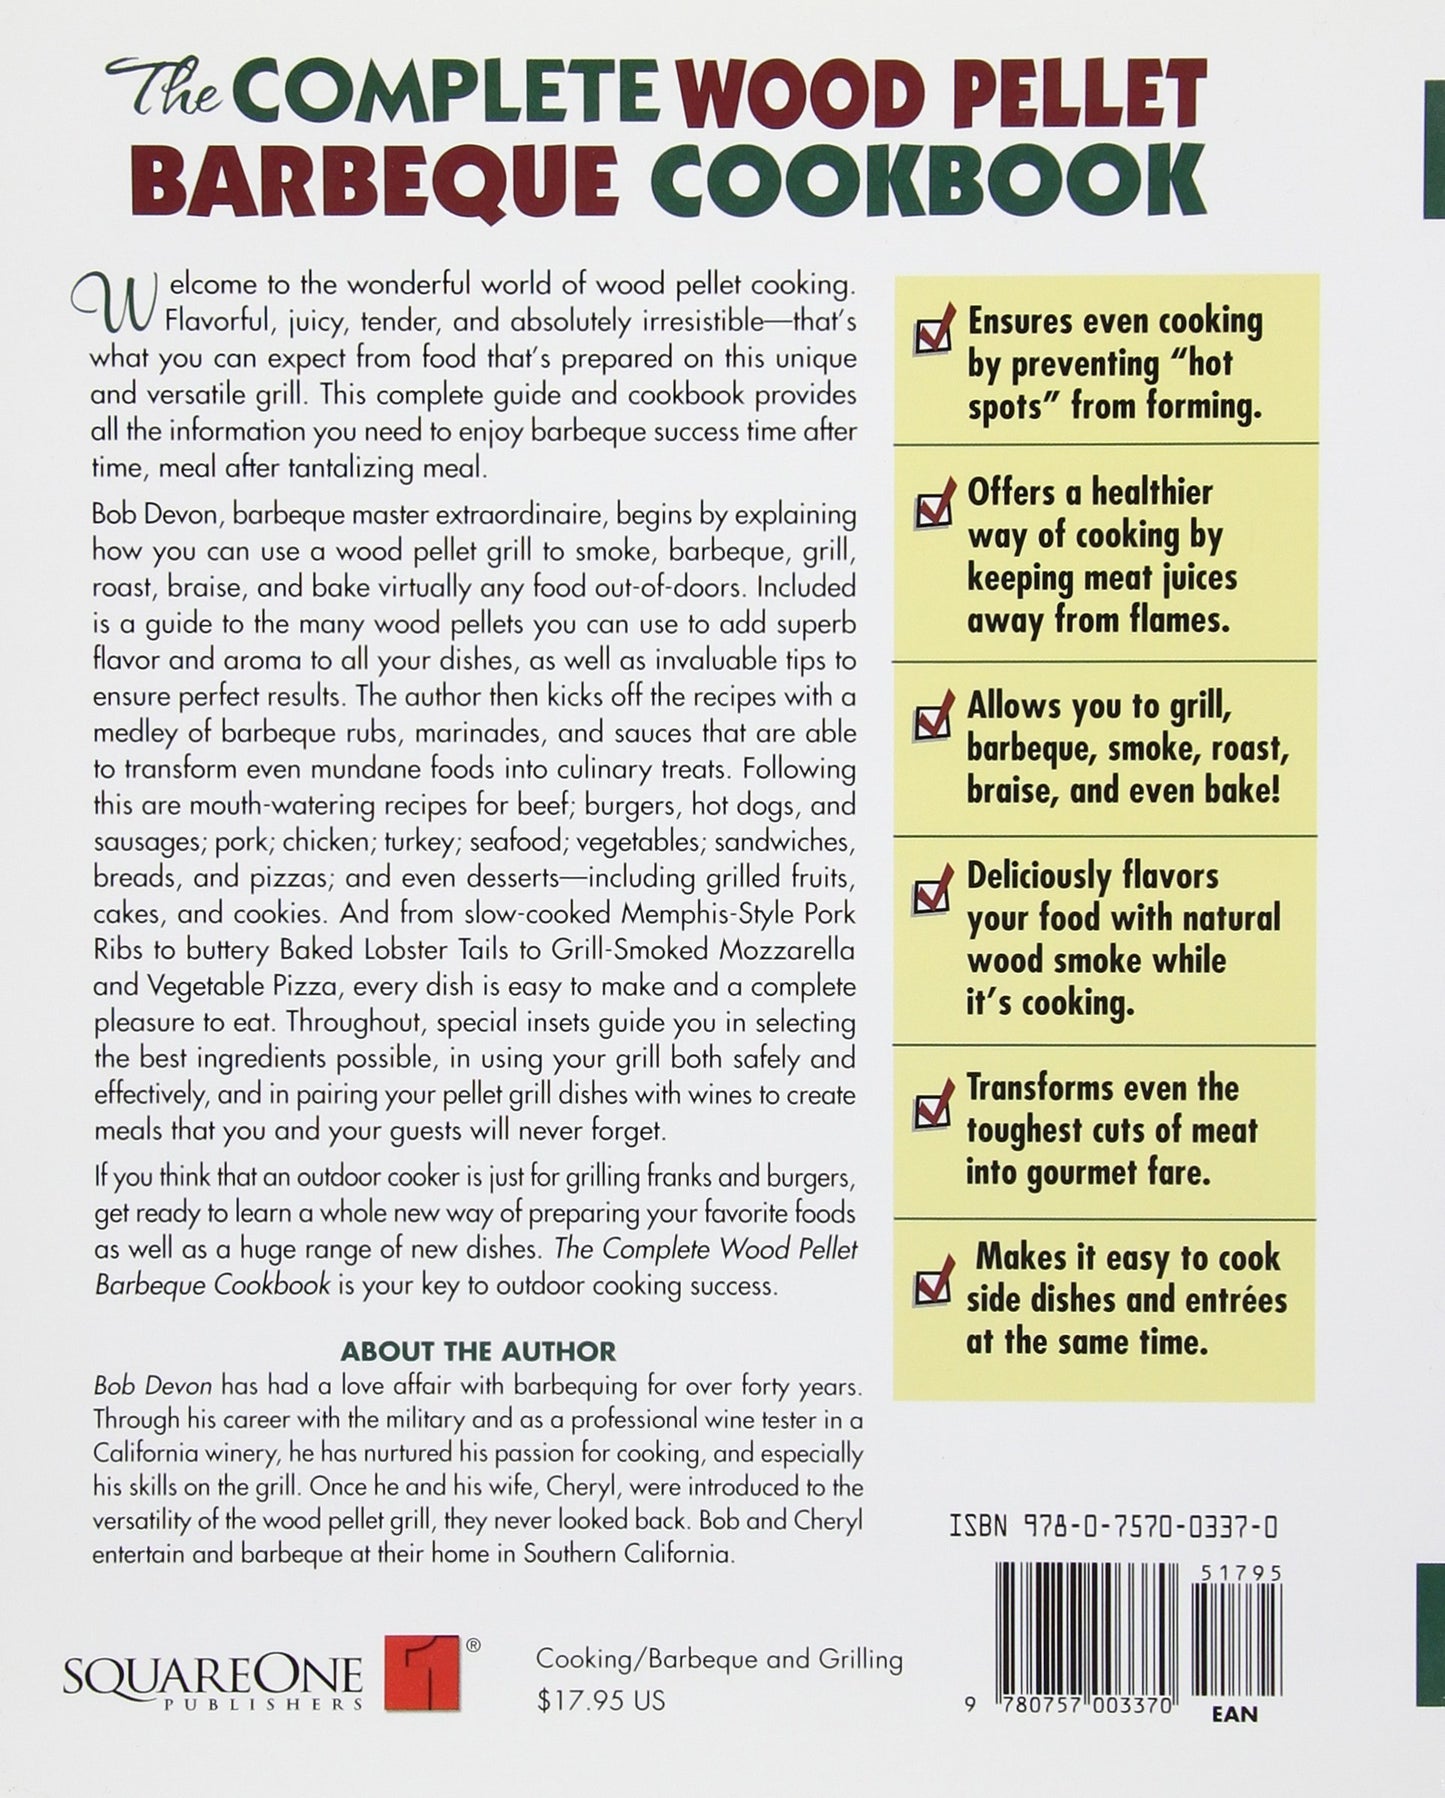 The Complete Wood Pellet Barbeque Cookbook: The Ultimate Guide and Recipe Book for Wood Pellet Grills - BKPELLET